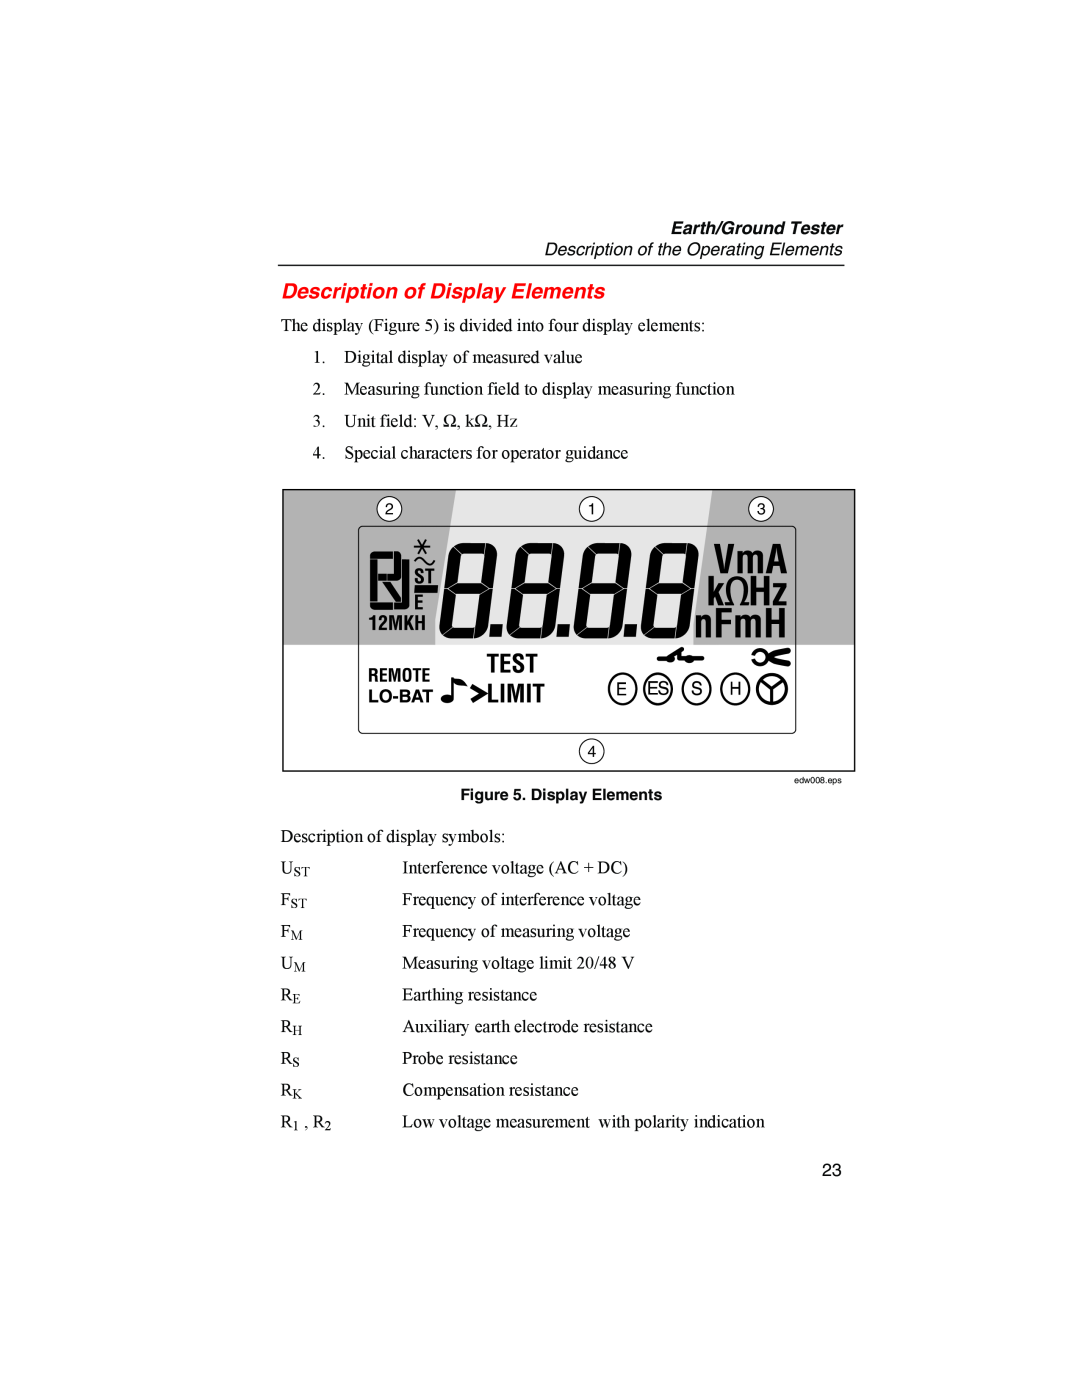 Fluke 1625 user manual Description of Display Elements, Earth/Ground Tester, Description of the Operating Elements 